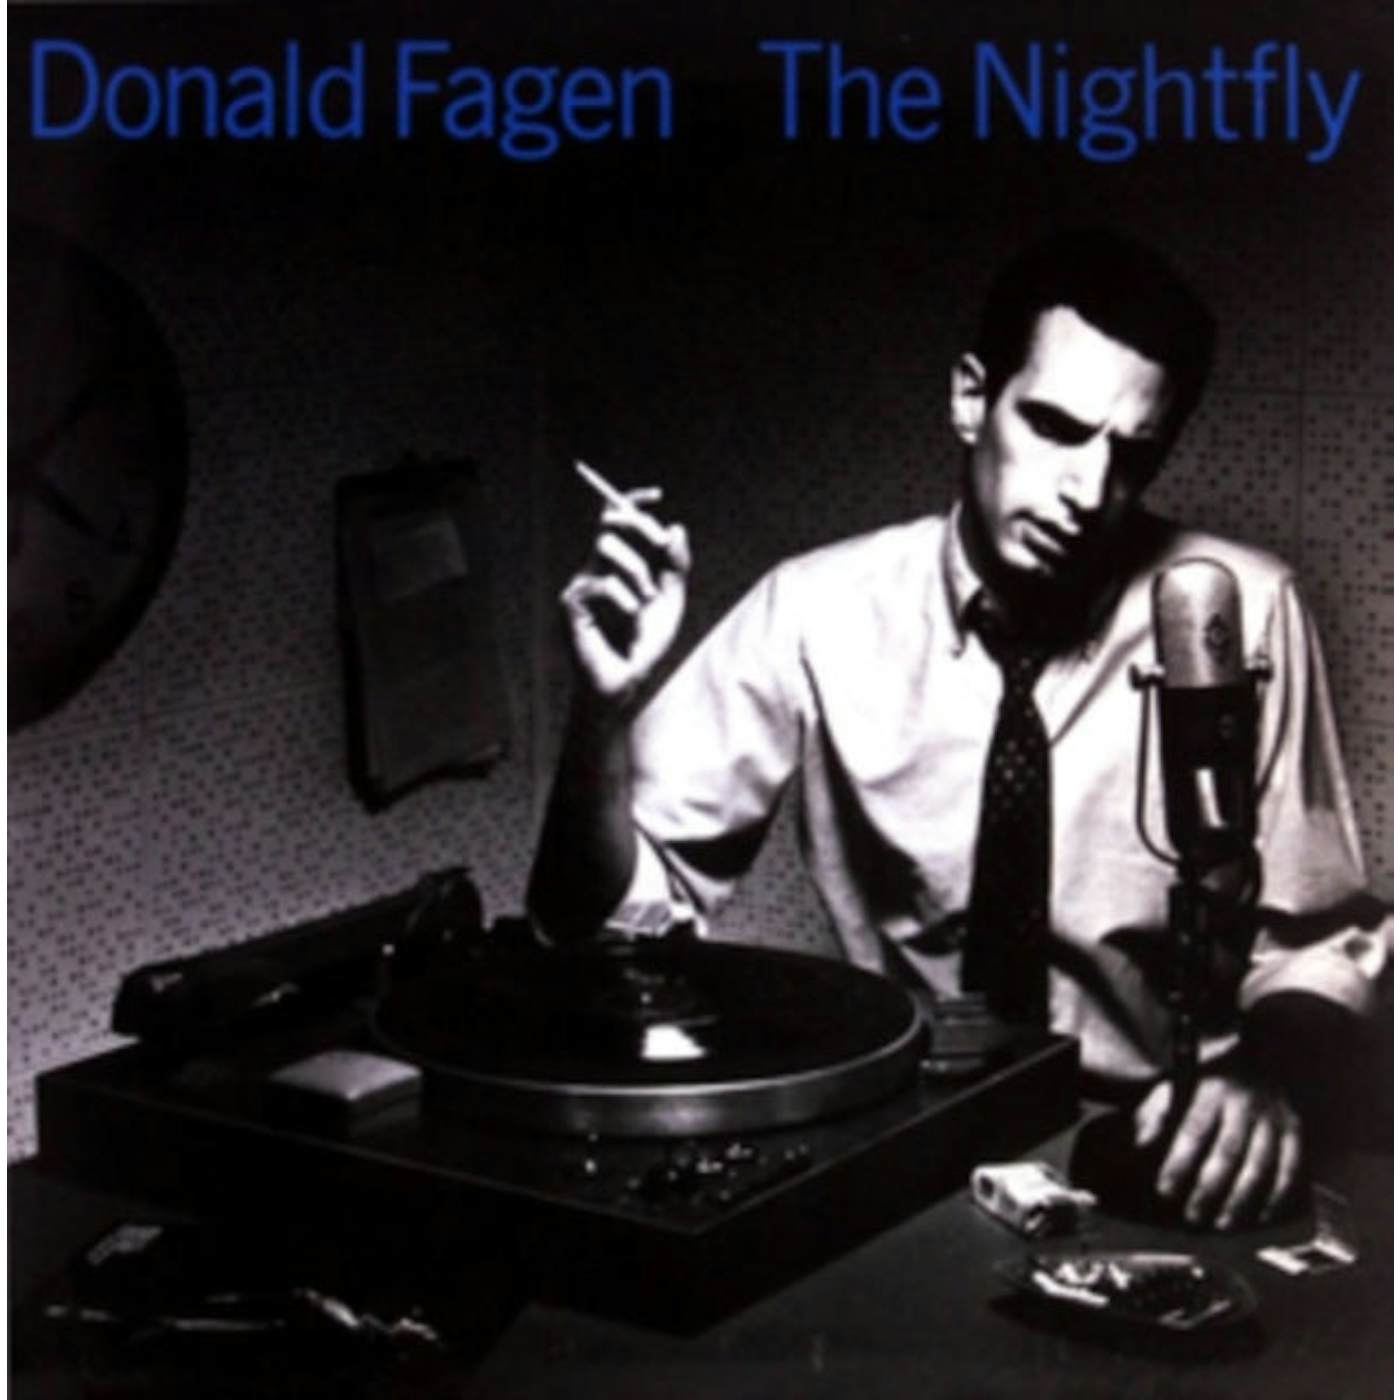 Donald Fagen LP Vinyl Record - The Nightfly